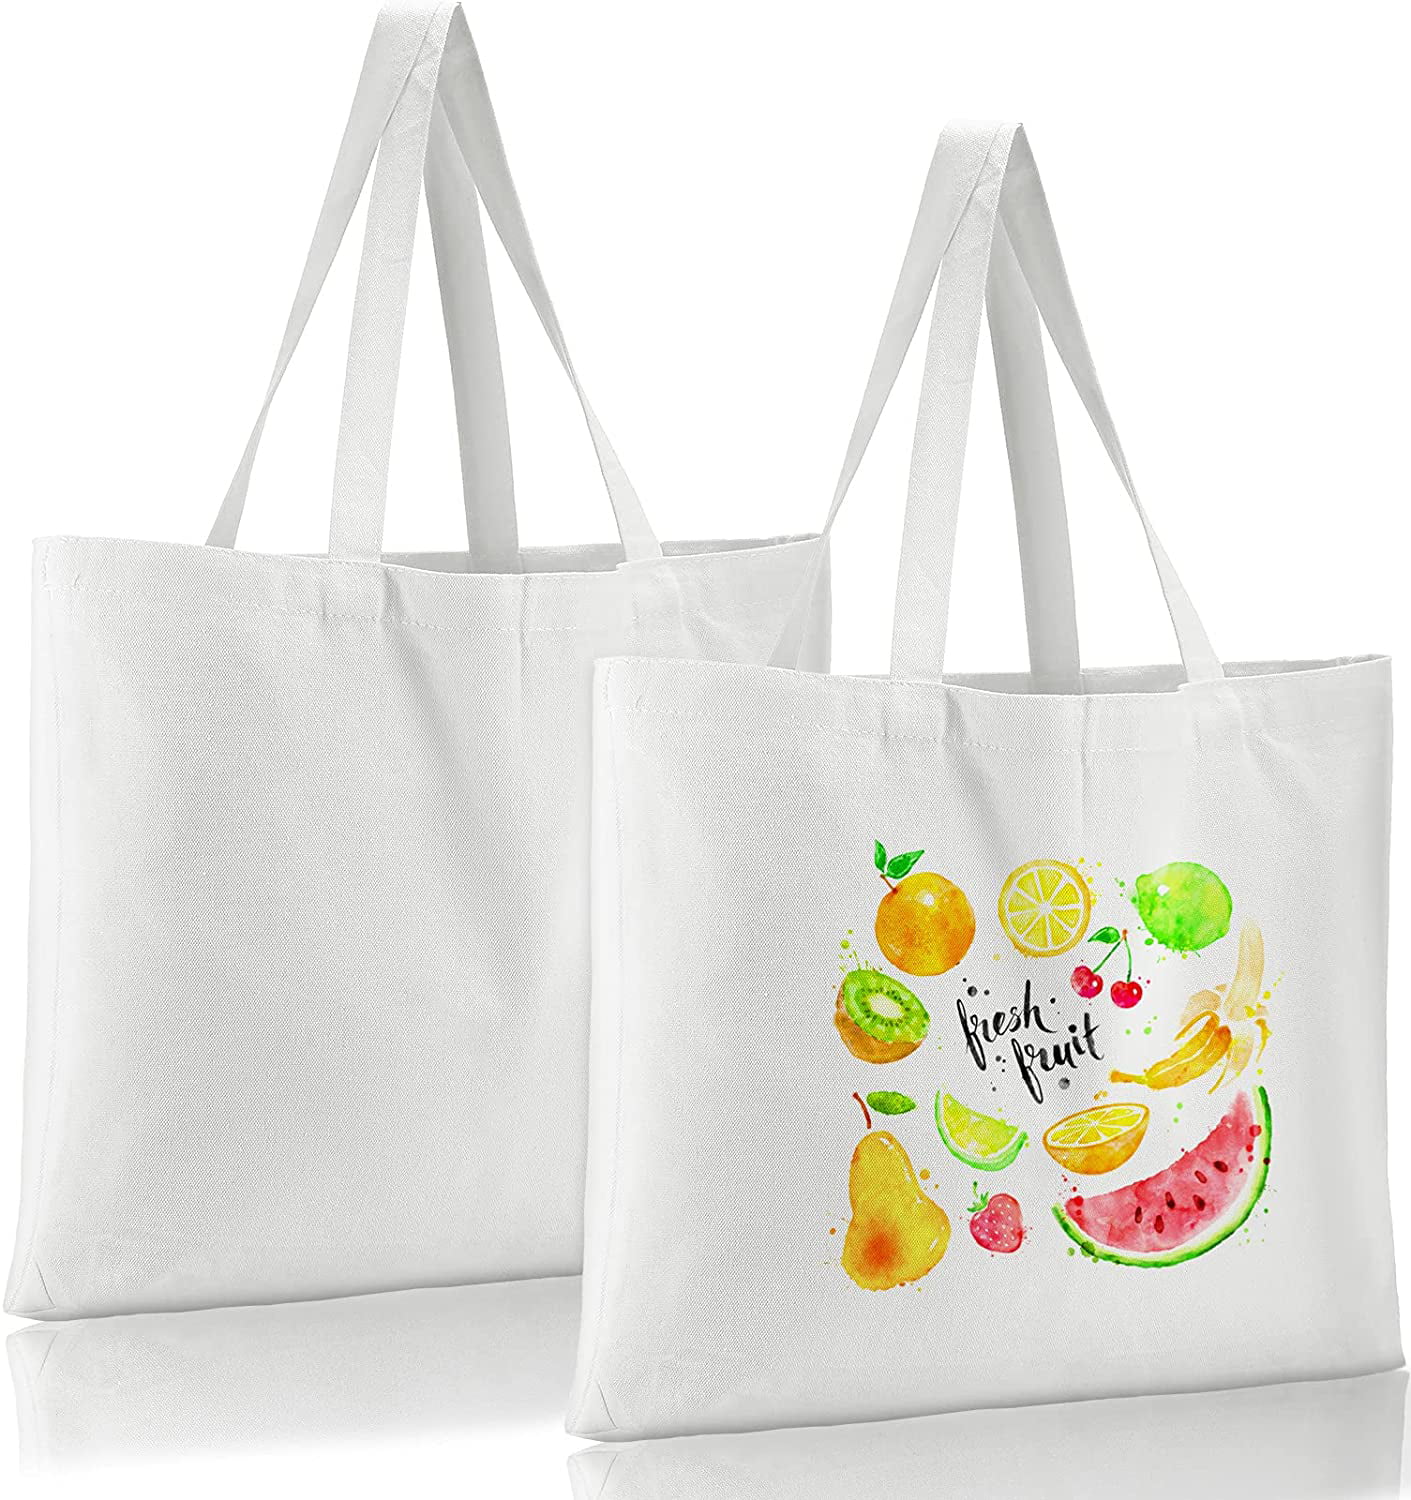 4PCS 14.8"x17" Canvas Tote Bags White Shopping Bags Canvas Bag DIY Sublimation 